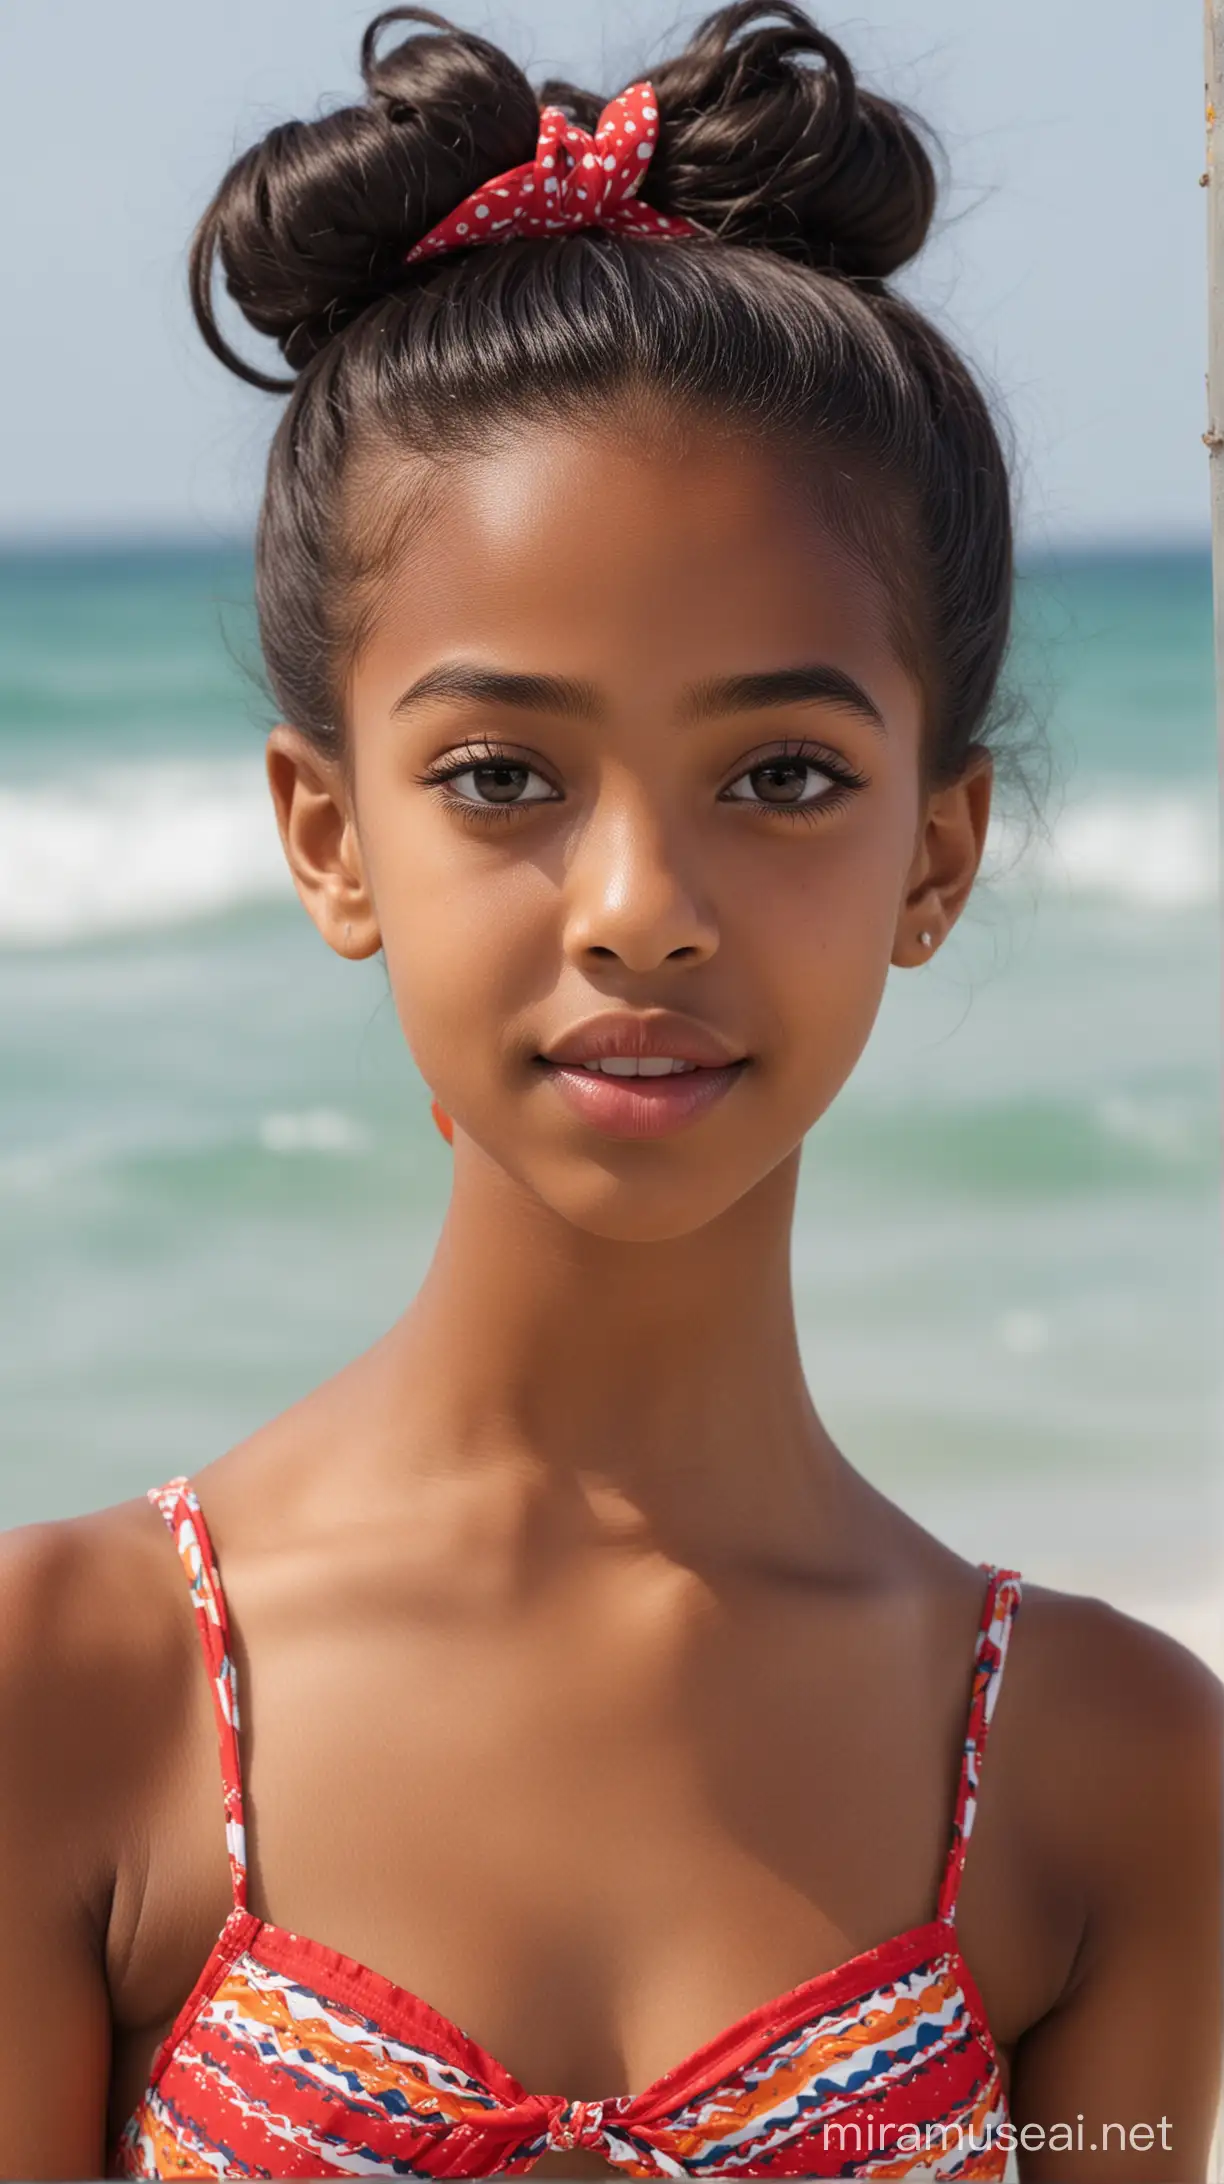 Elegant Black Woman in Bikini at Beach